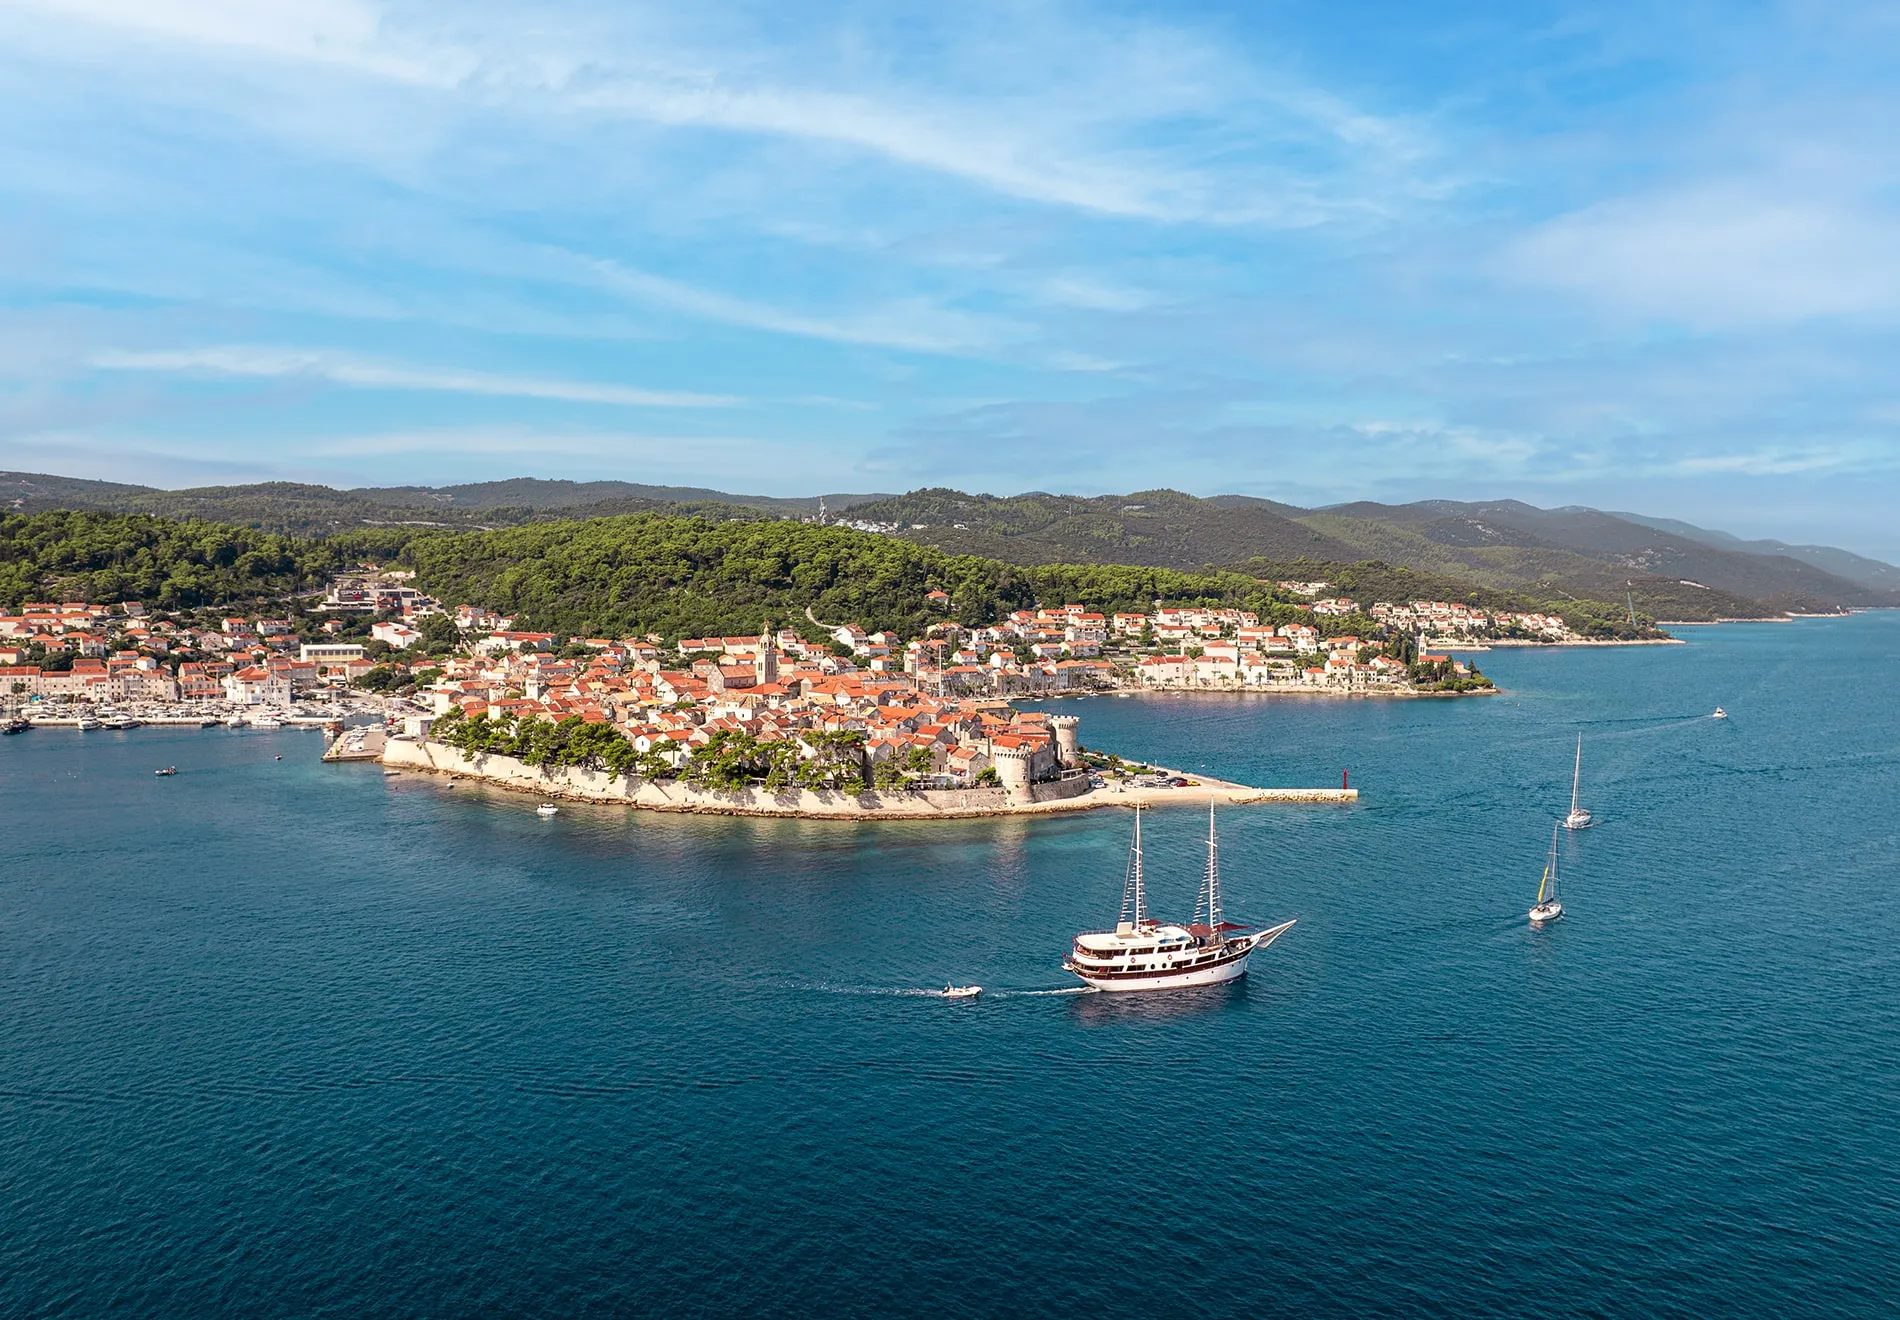 Korčula - Marco Polo's Birthplace